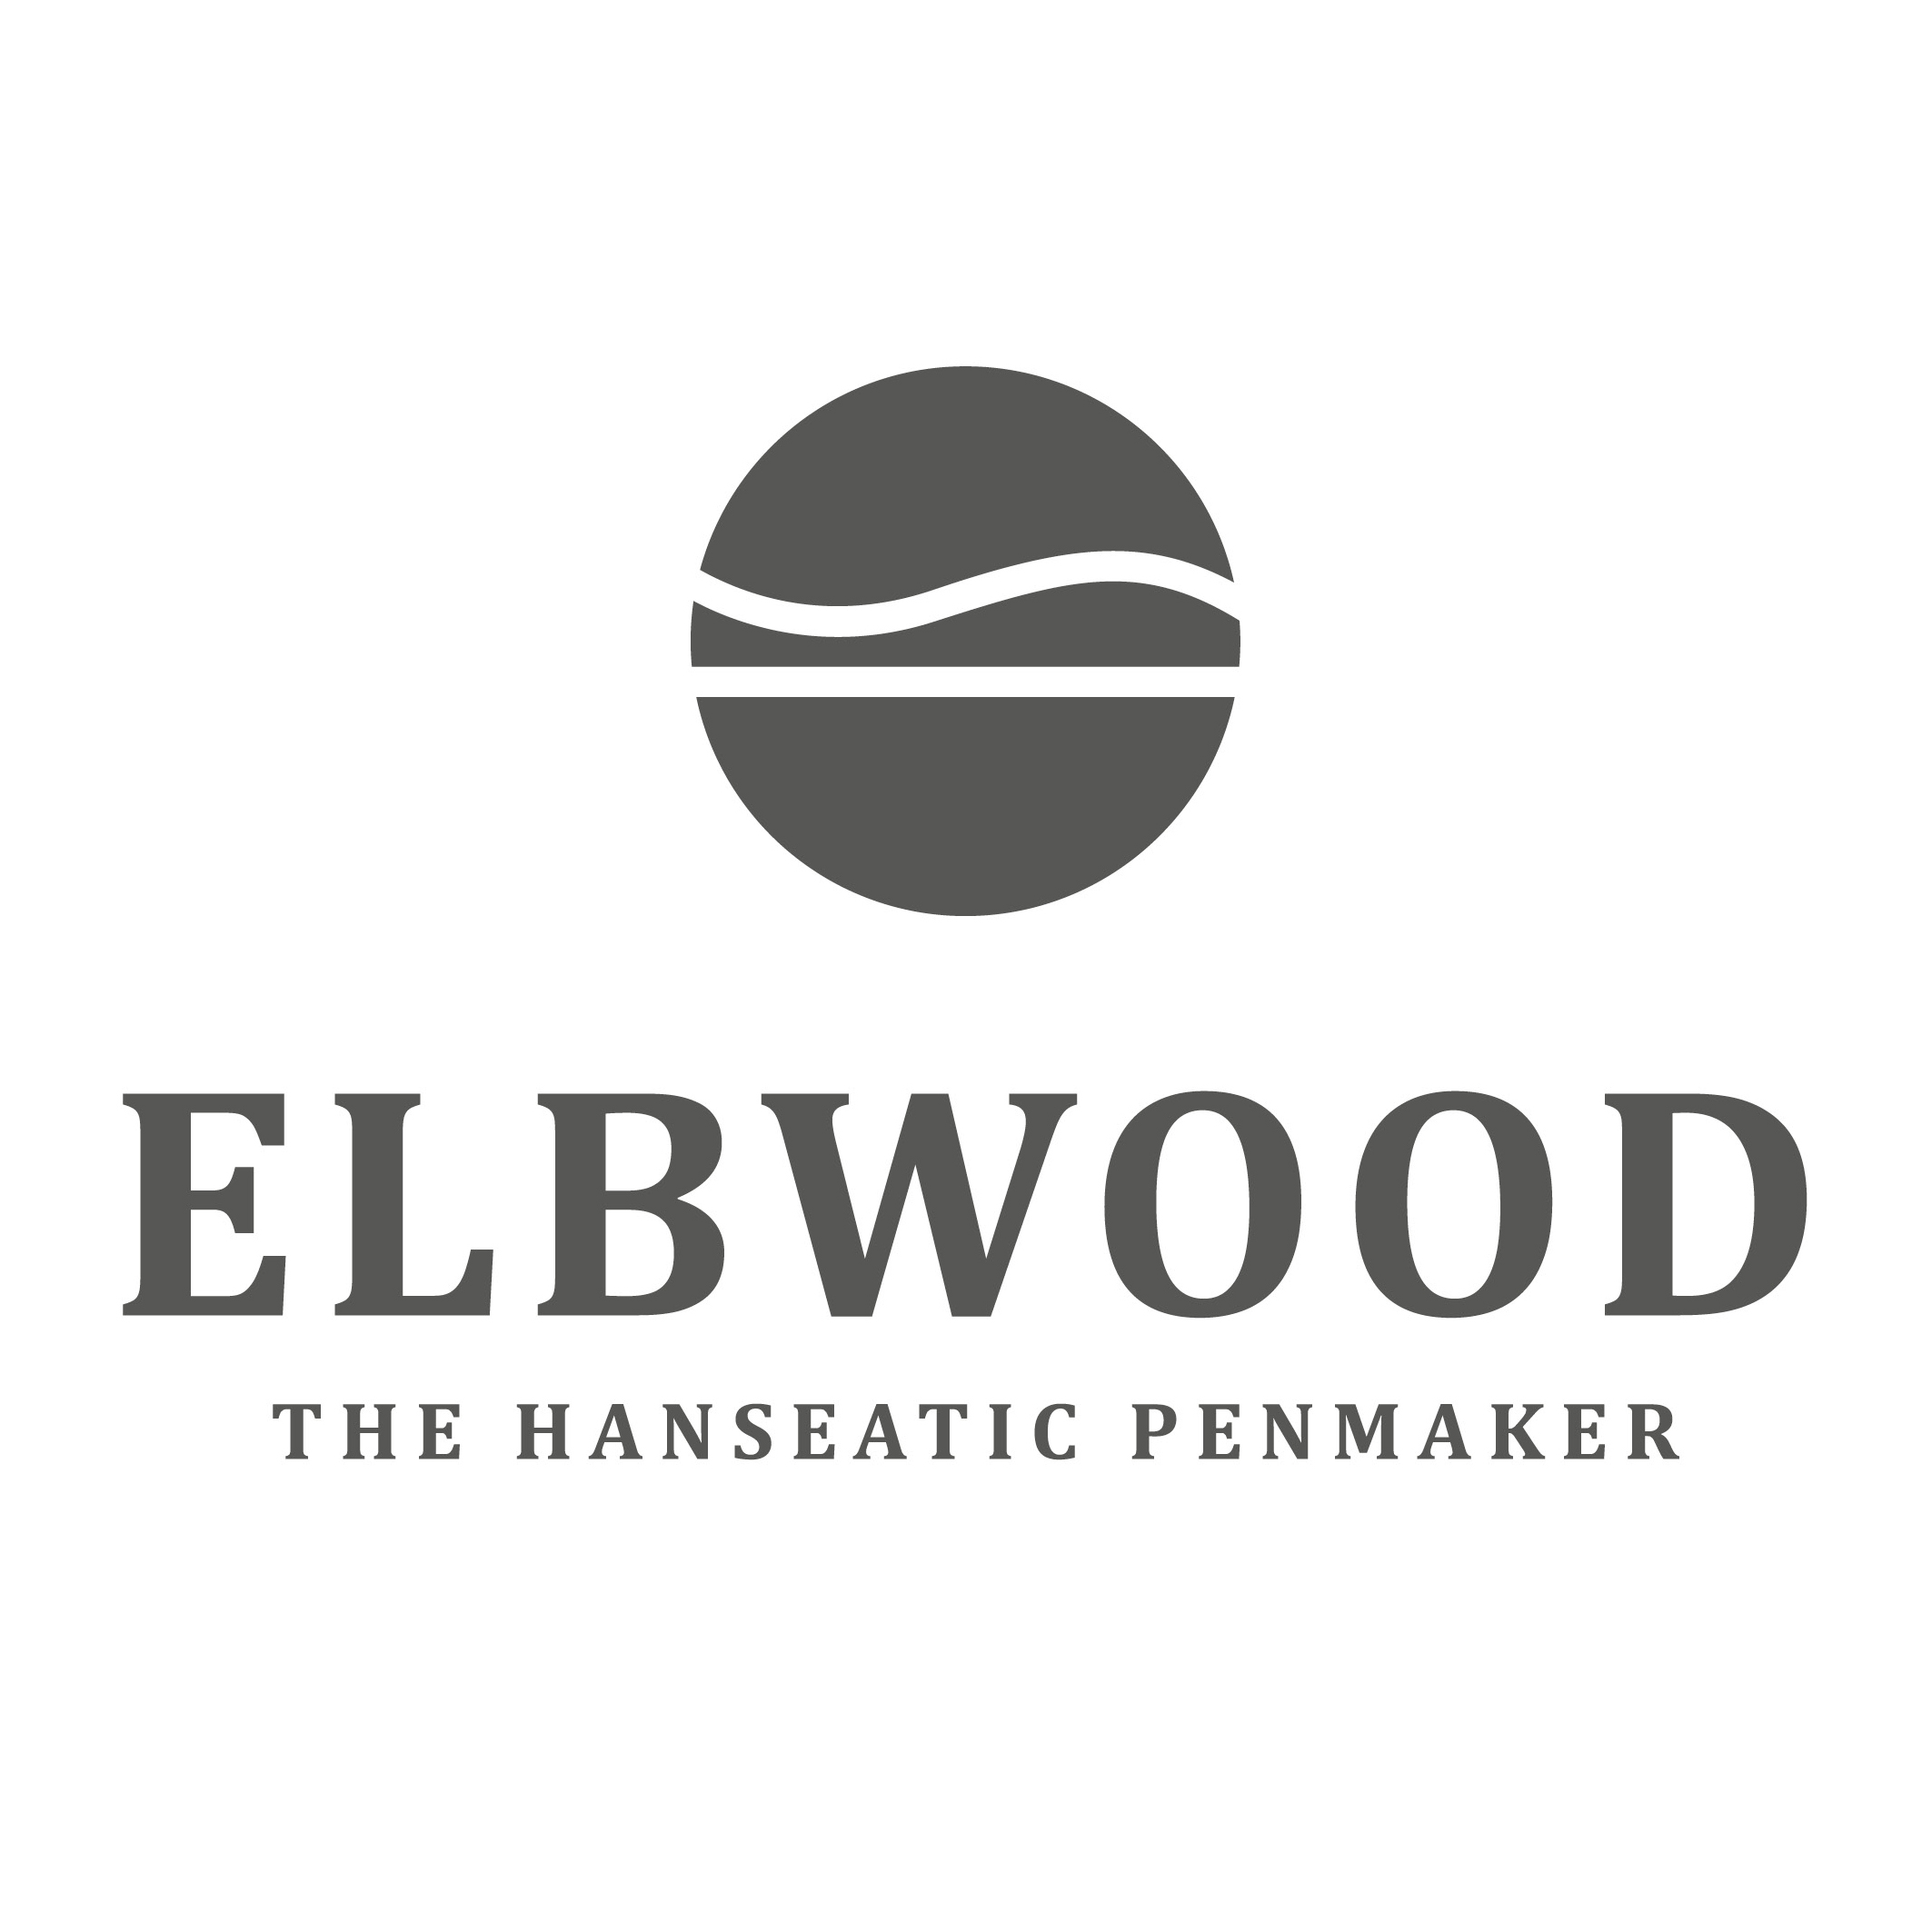 ELBWOOD - The Hanseatic Penmaker